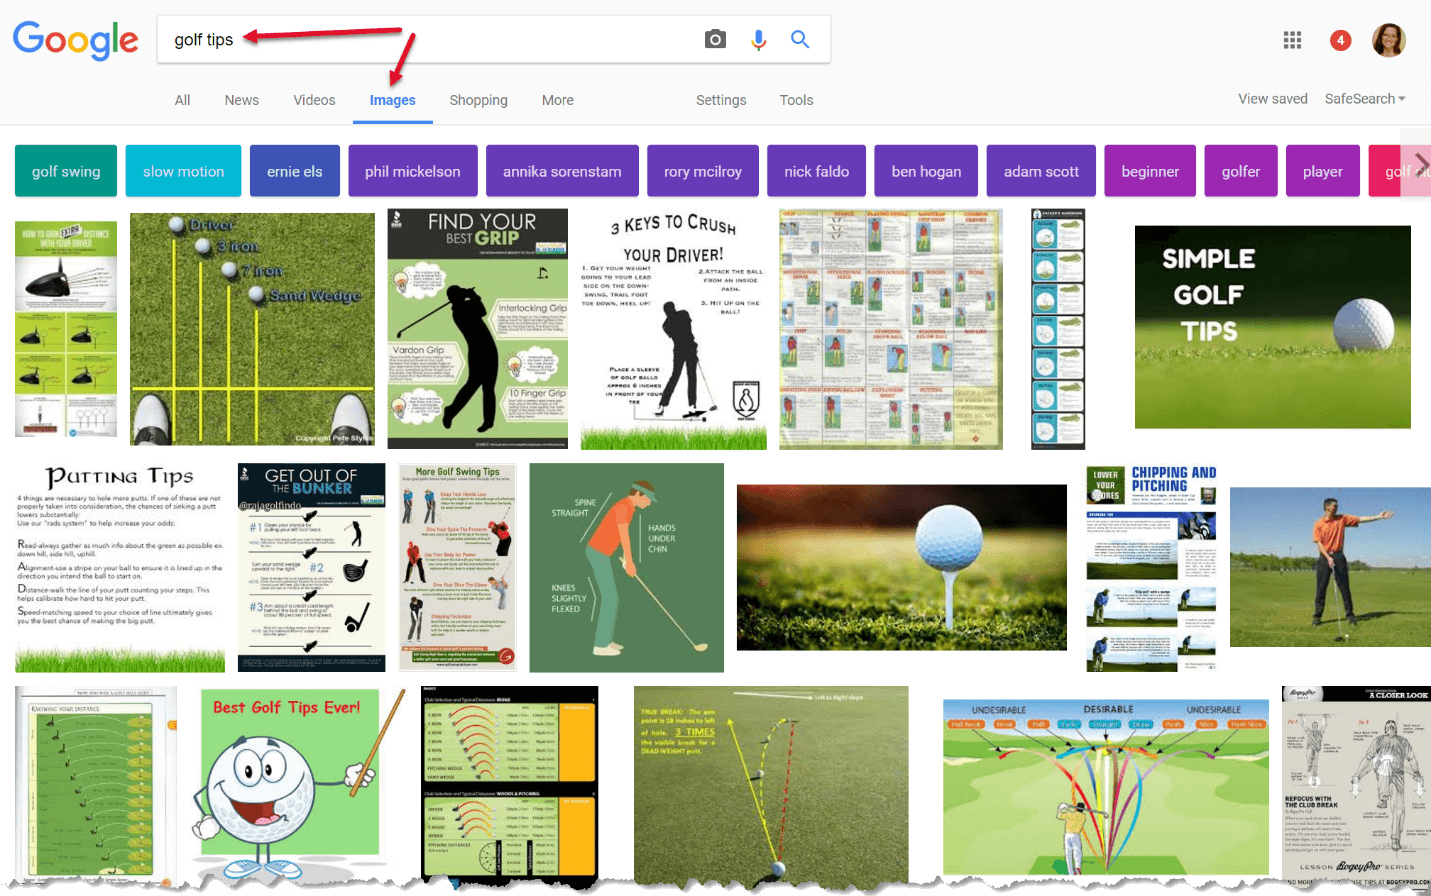 Google Golf Example